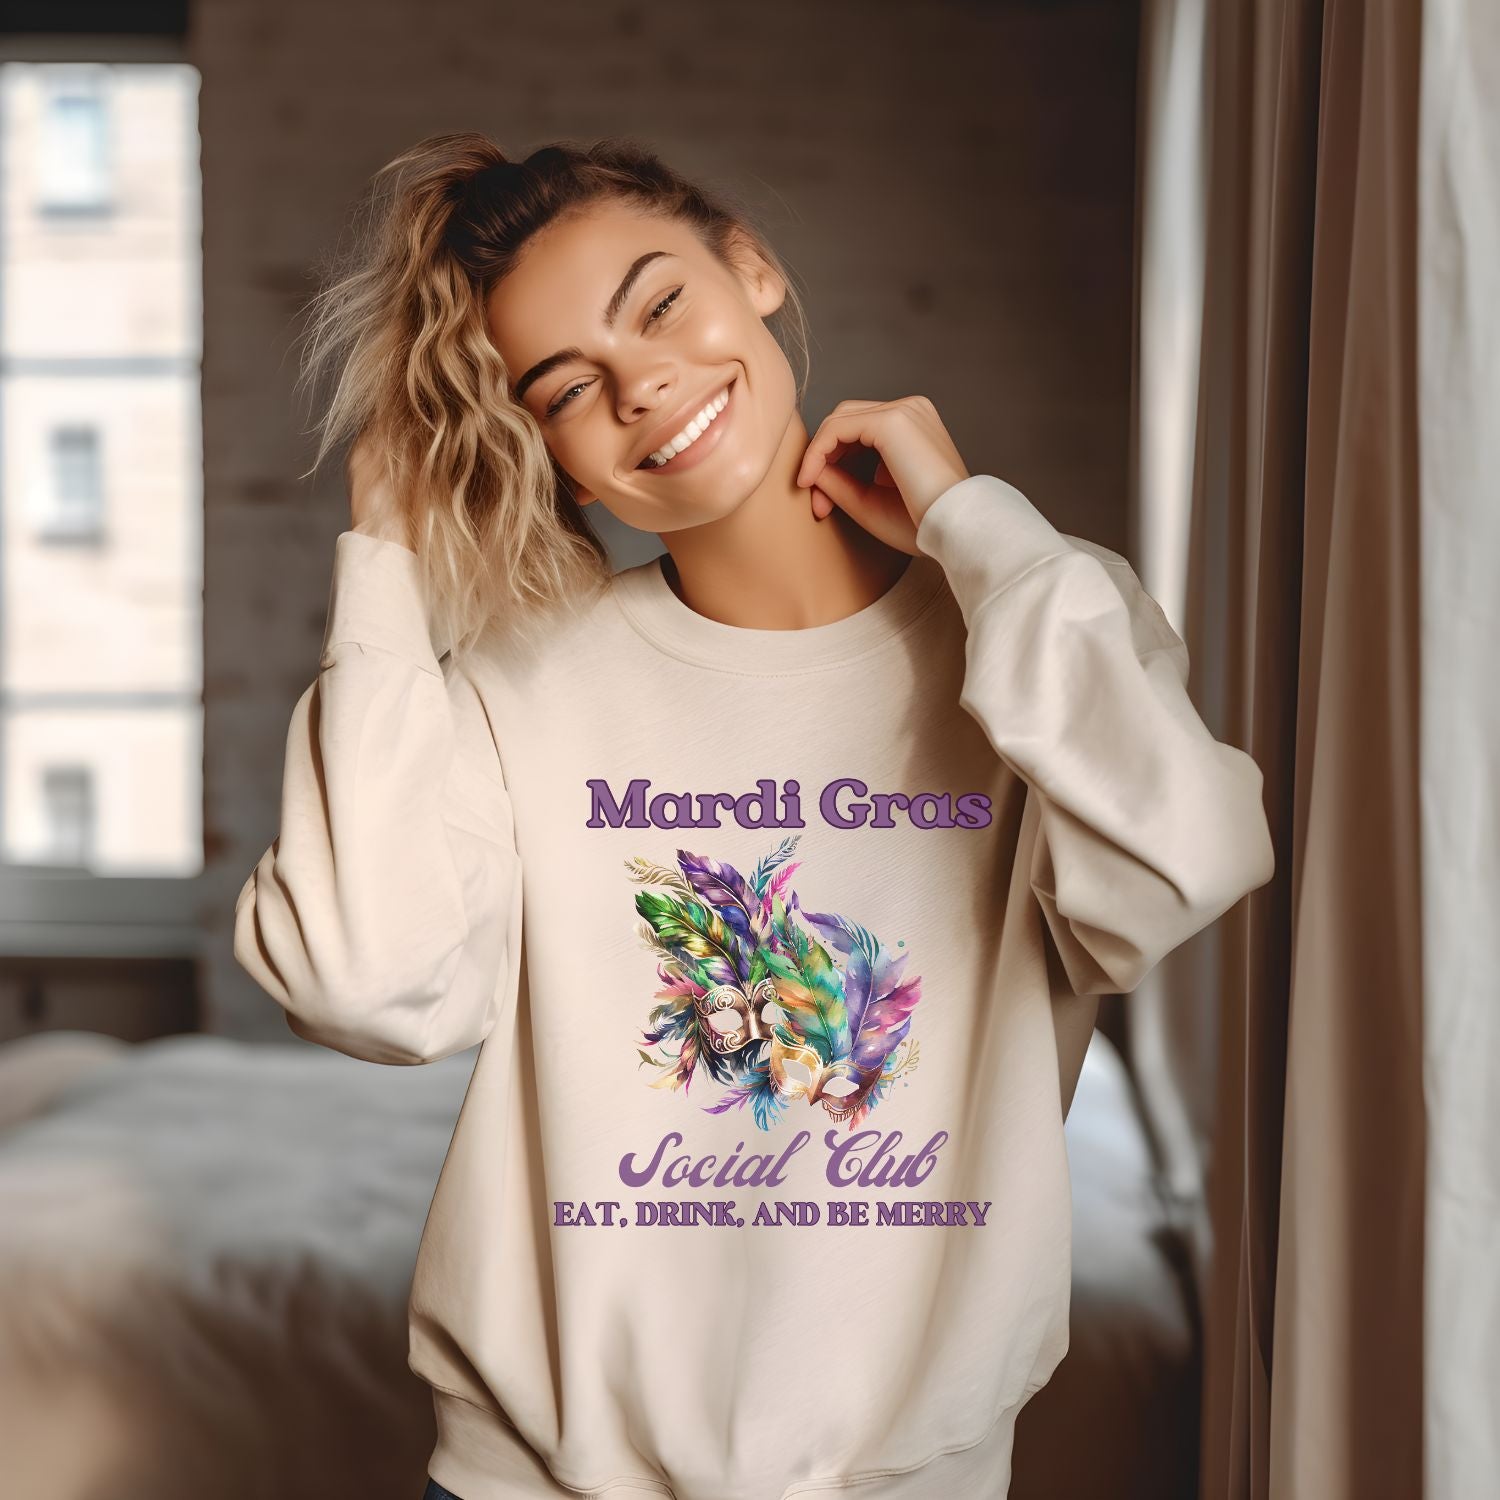 Mardi Gras Sweatshirt Women - NOLA Luxury Bachelorette Sweater, Unique Fat Tuesday Shirt, Louisiana Girls Trip Sweater, Mardi Gras Social Club Chic Sweatshirt   